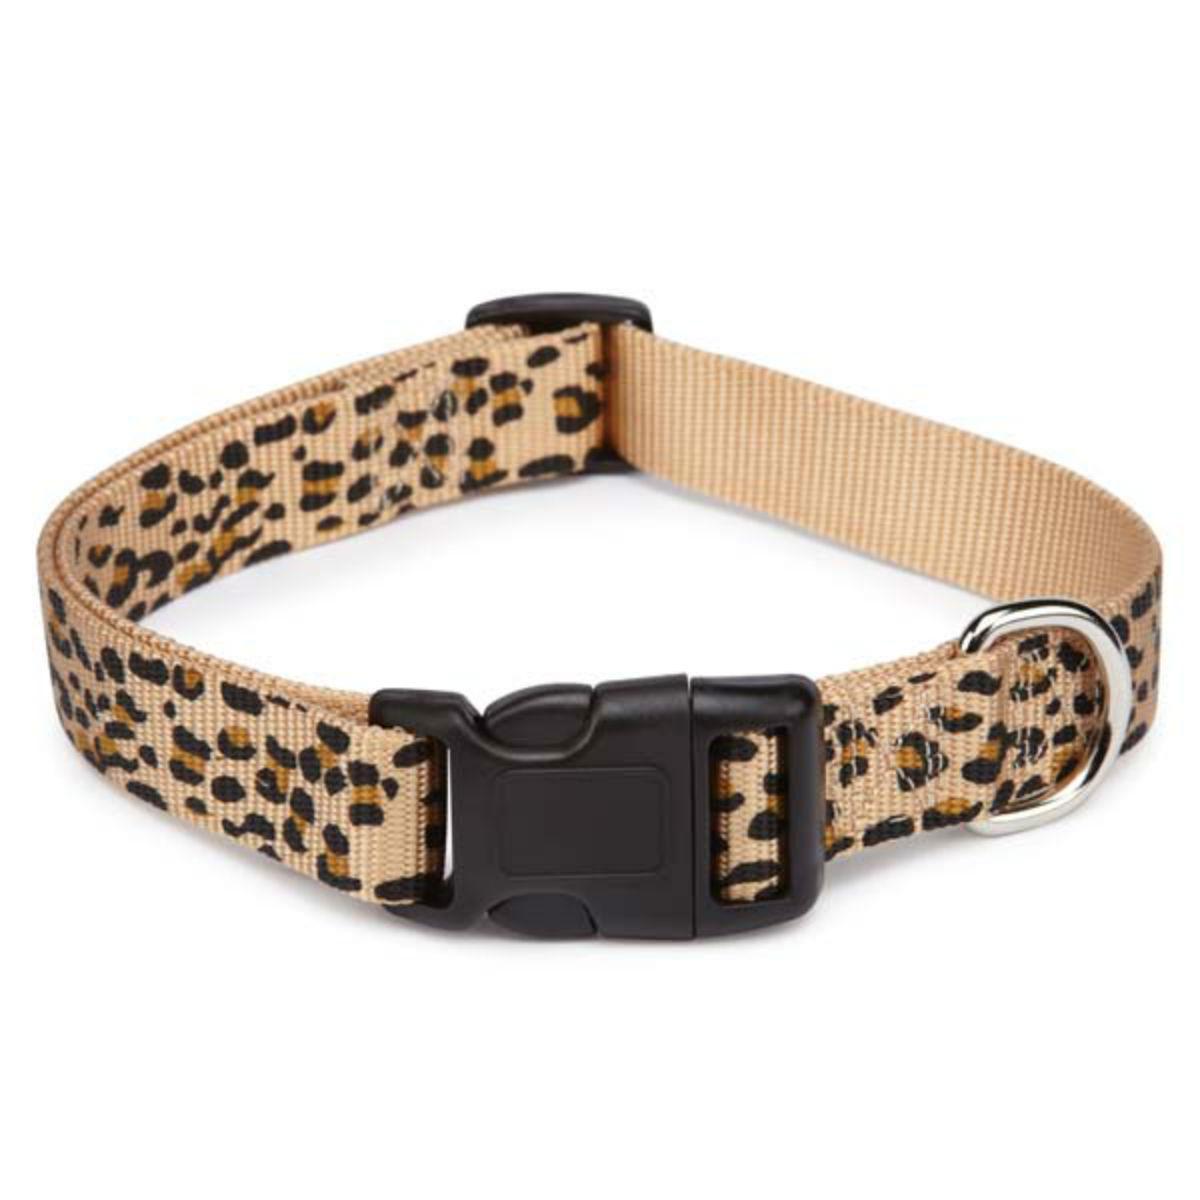 Casual Canine Animal Print Dog Collar - Cheetah